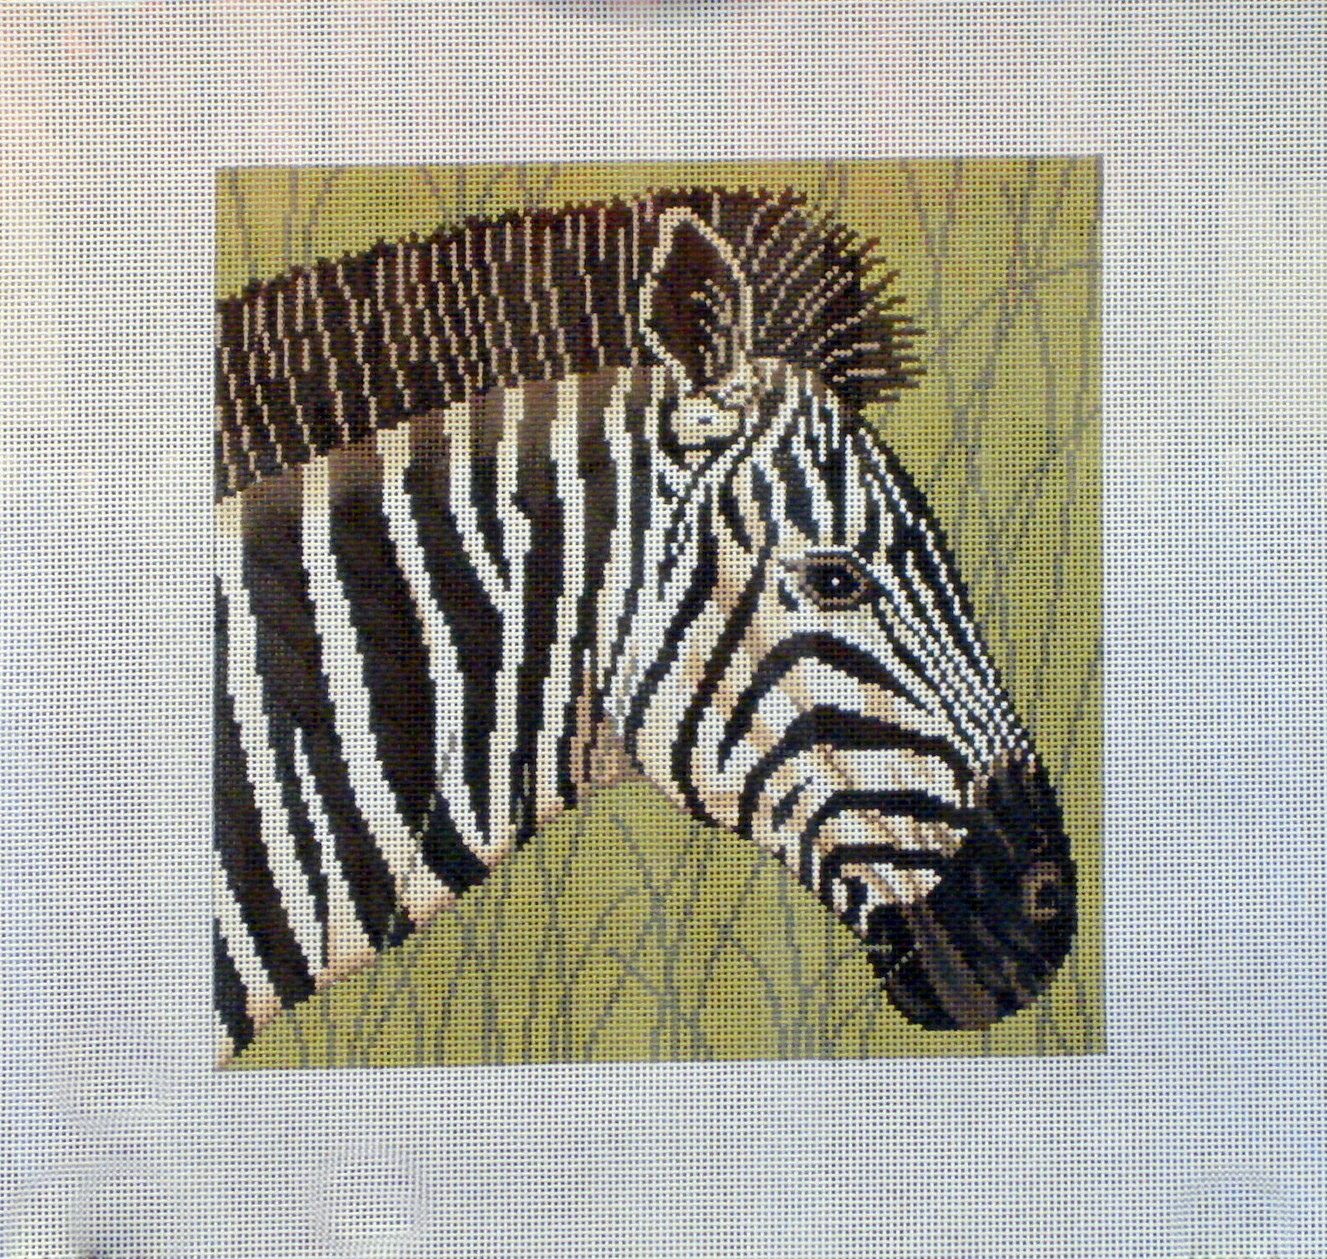 Zebra in Grass       (Handpainted by JP Designs)